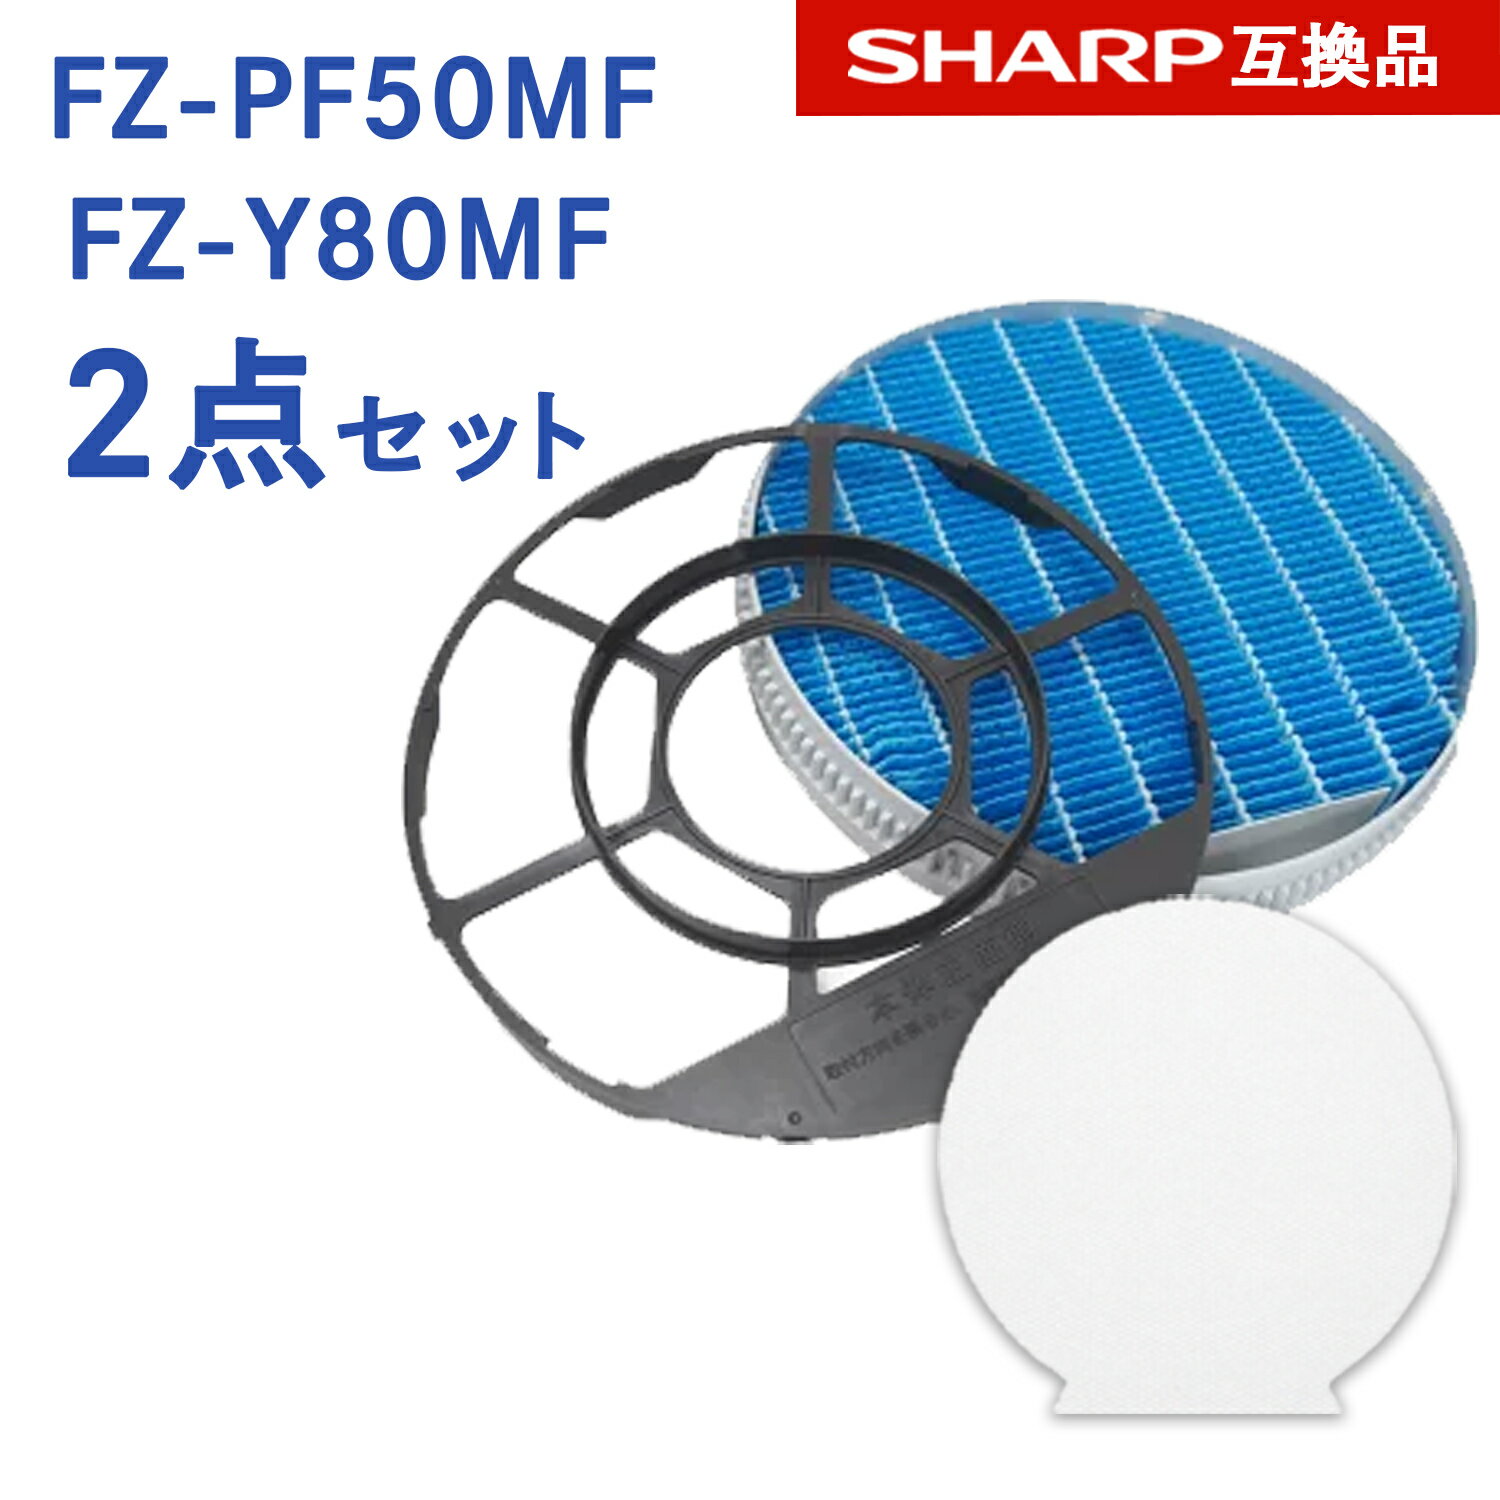 SHARP ( シャープ )互換品 FZ-PF50MF 使い捨て加湿プレフィルター 6枚入り / FZ-Y80MF 加湿フィルター (枠付き) 純正品同等 プラズマクラスター 加湿 空気清浄機用 交換用フィルター フィルター fz-pf50mf fz-y80mf